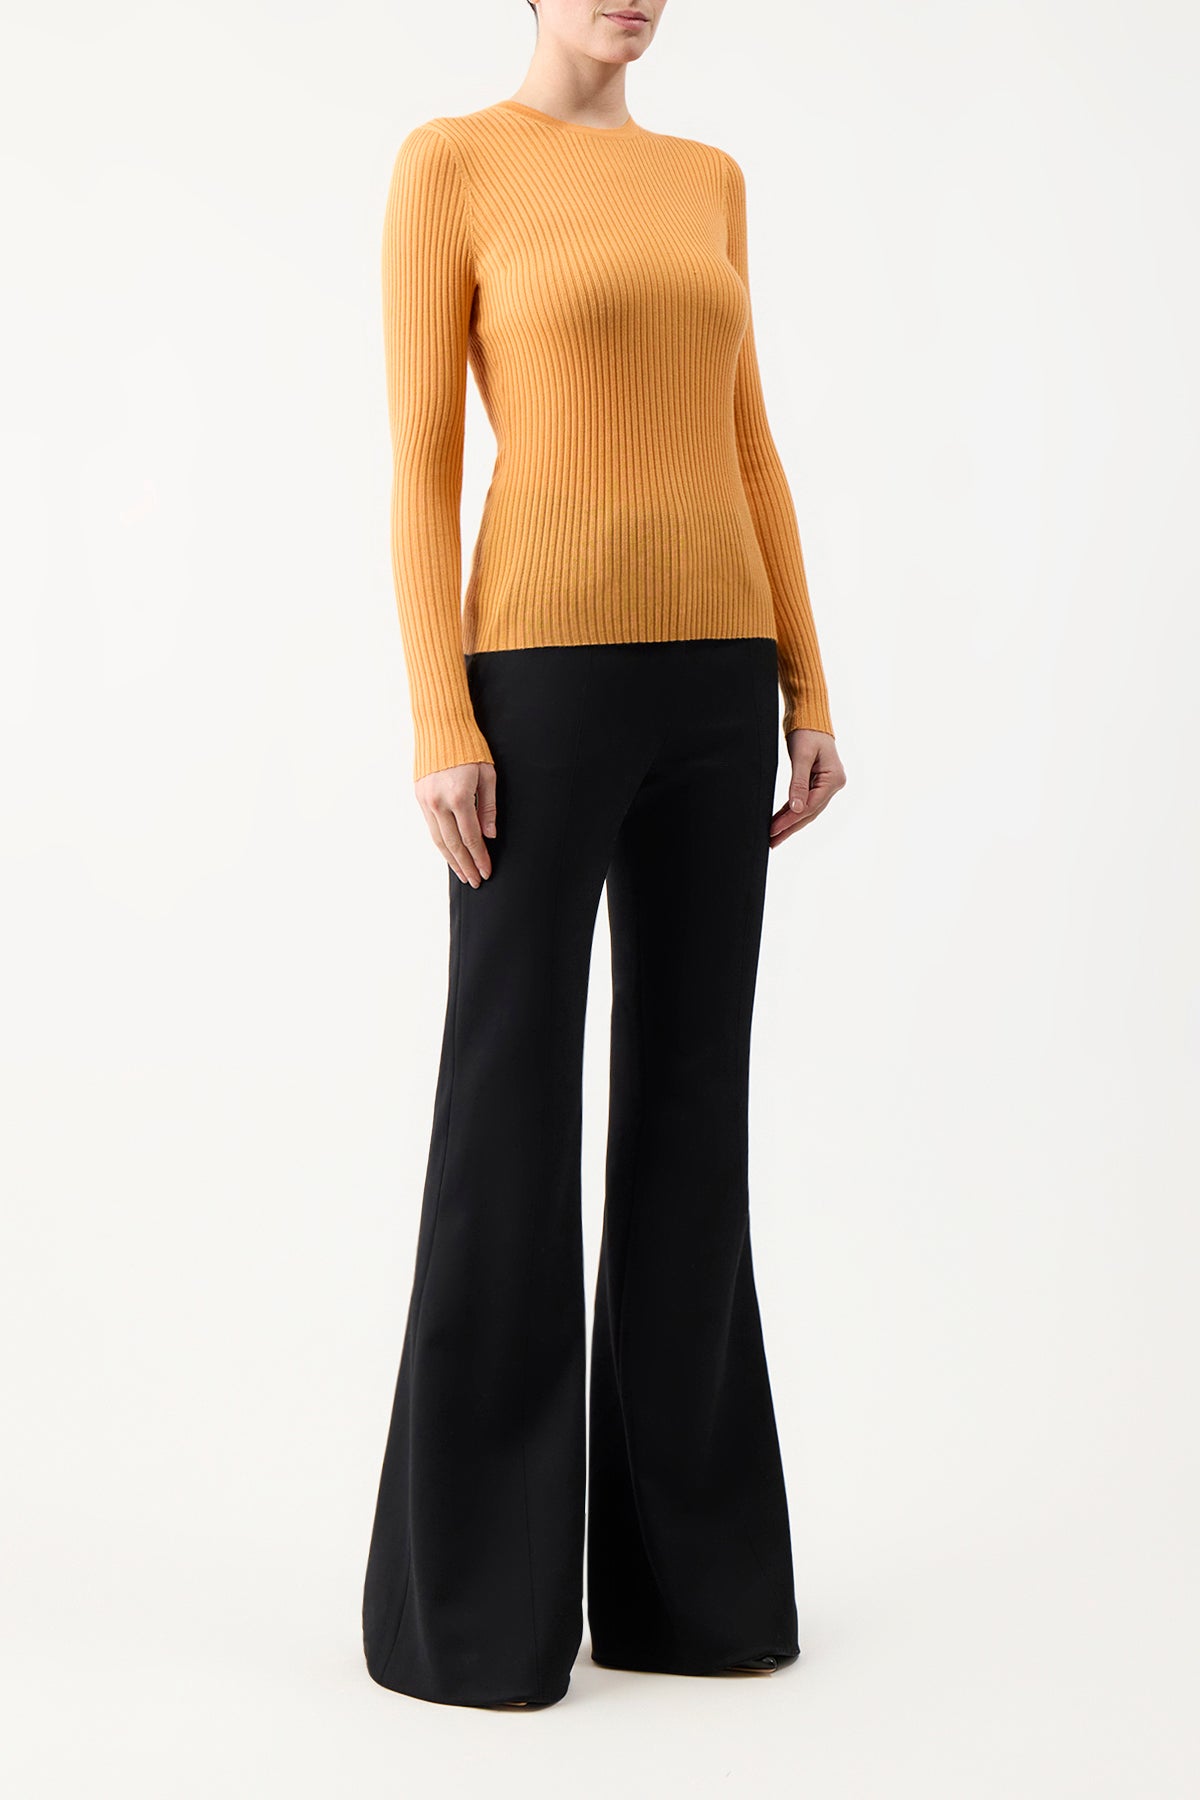 Browning Knit Sweater in Fluorescent Orange Cashmere Silk